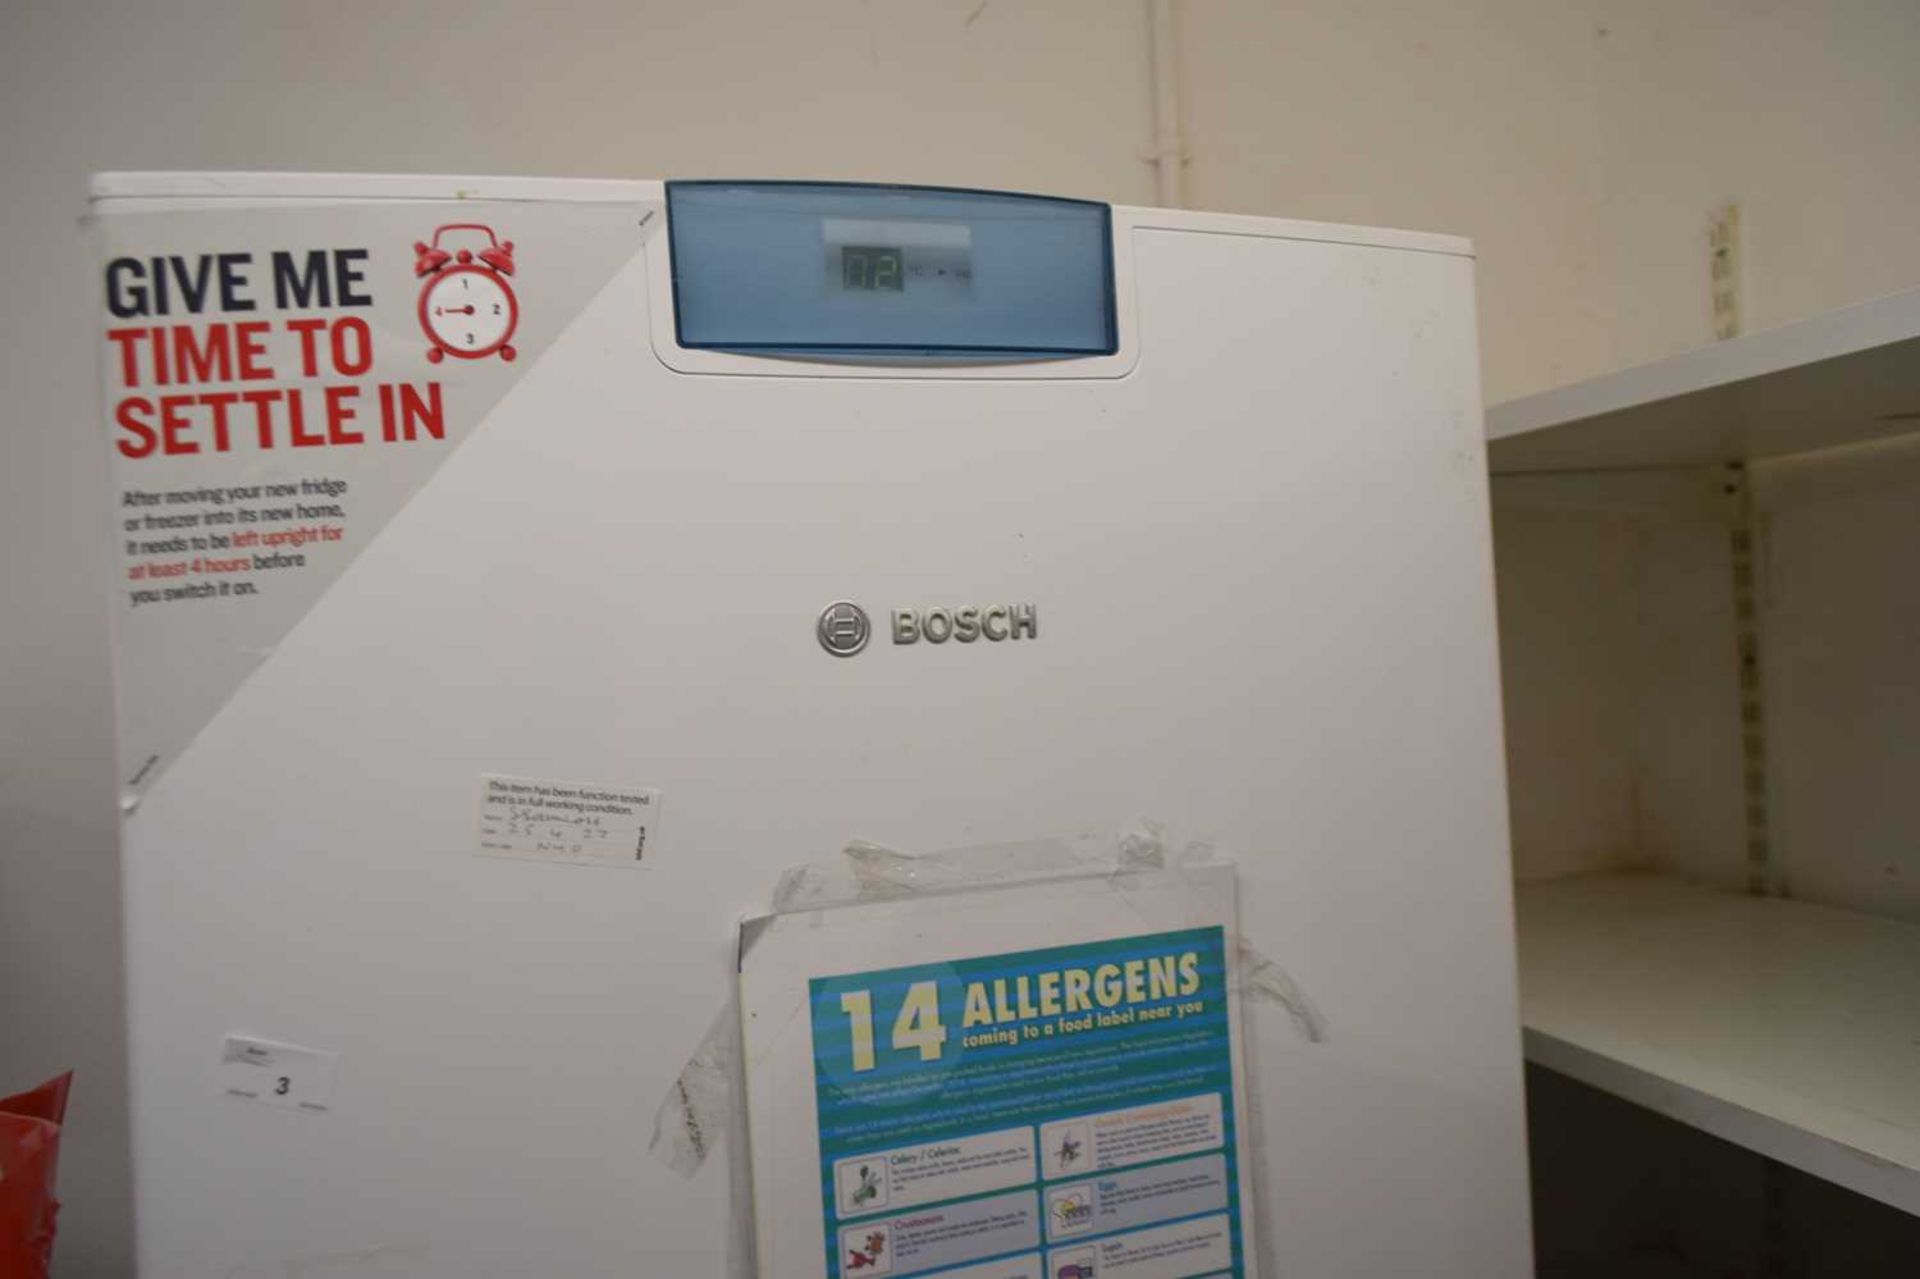 Bosch commercial fridge - Image 2 of 3